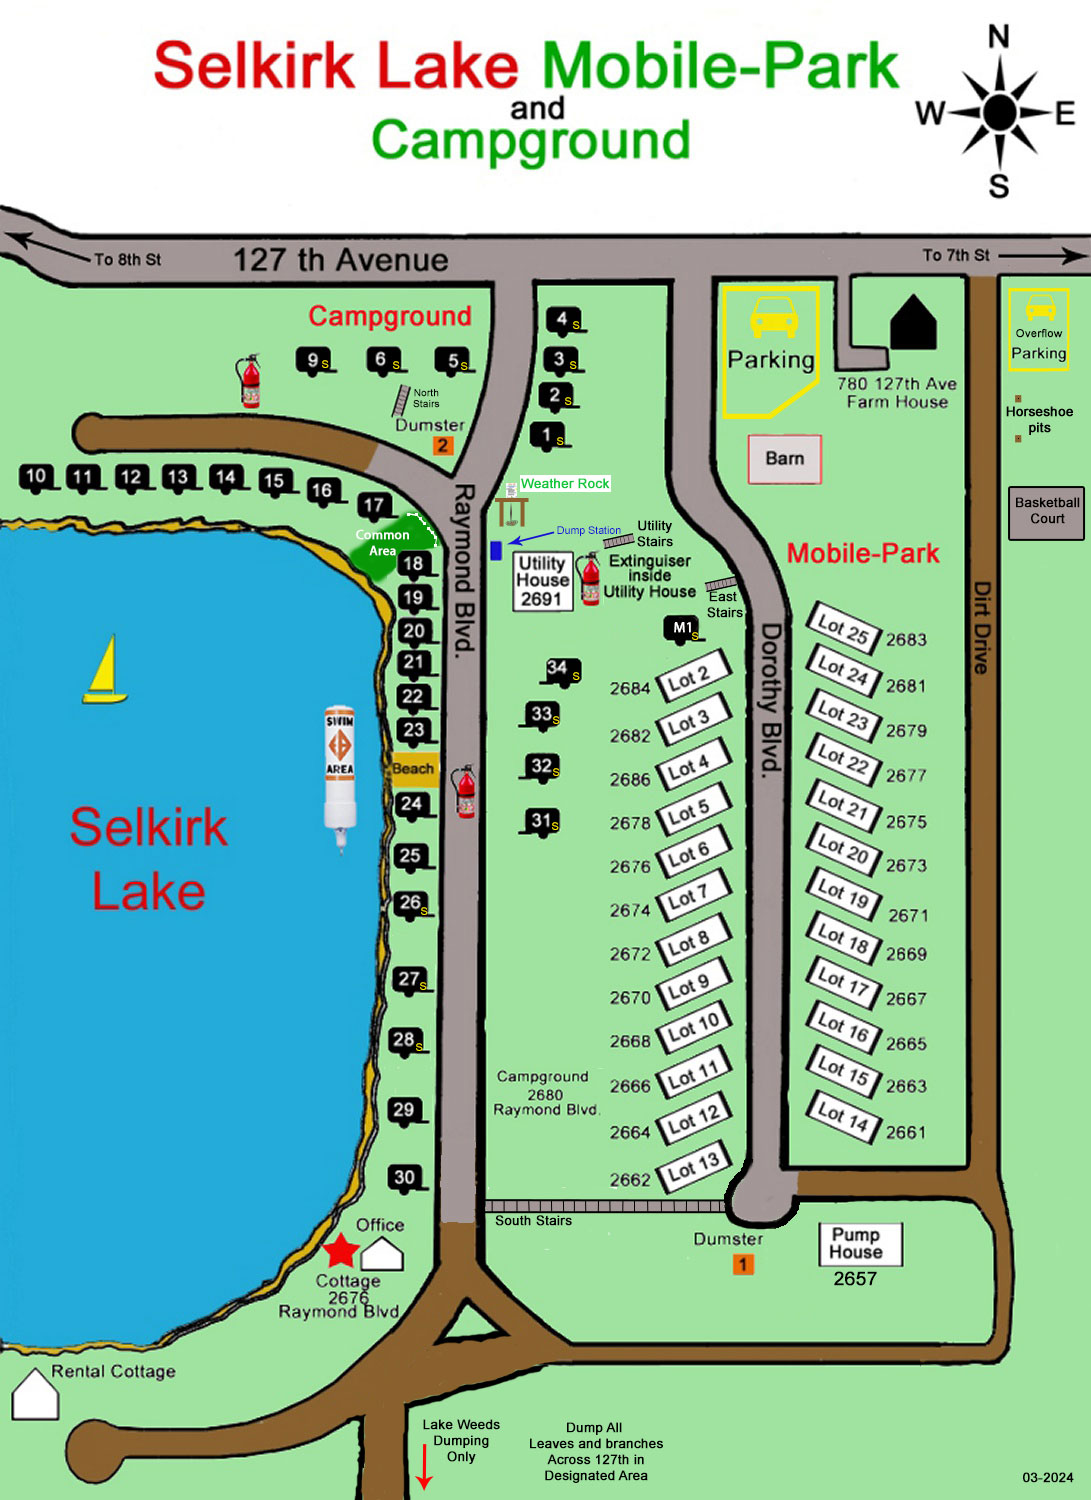 Selkirk Lake facility map.